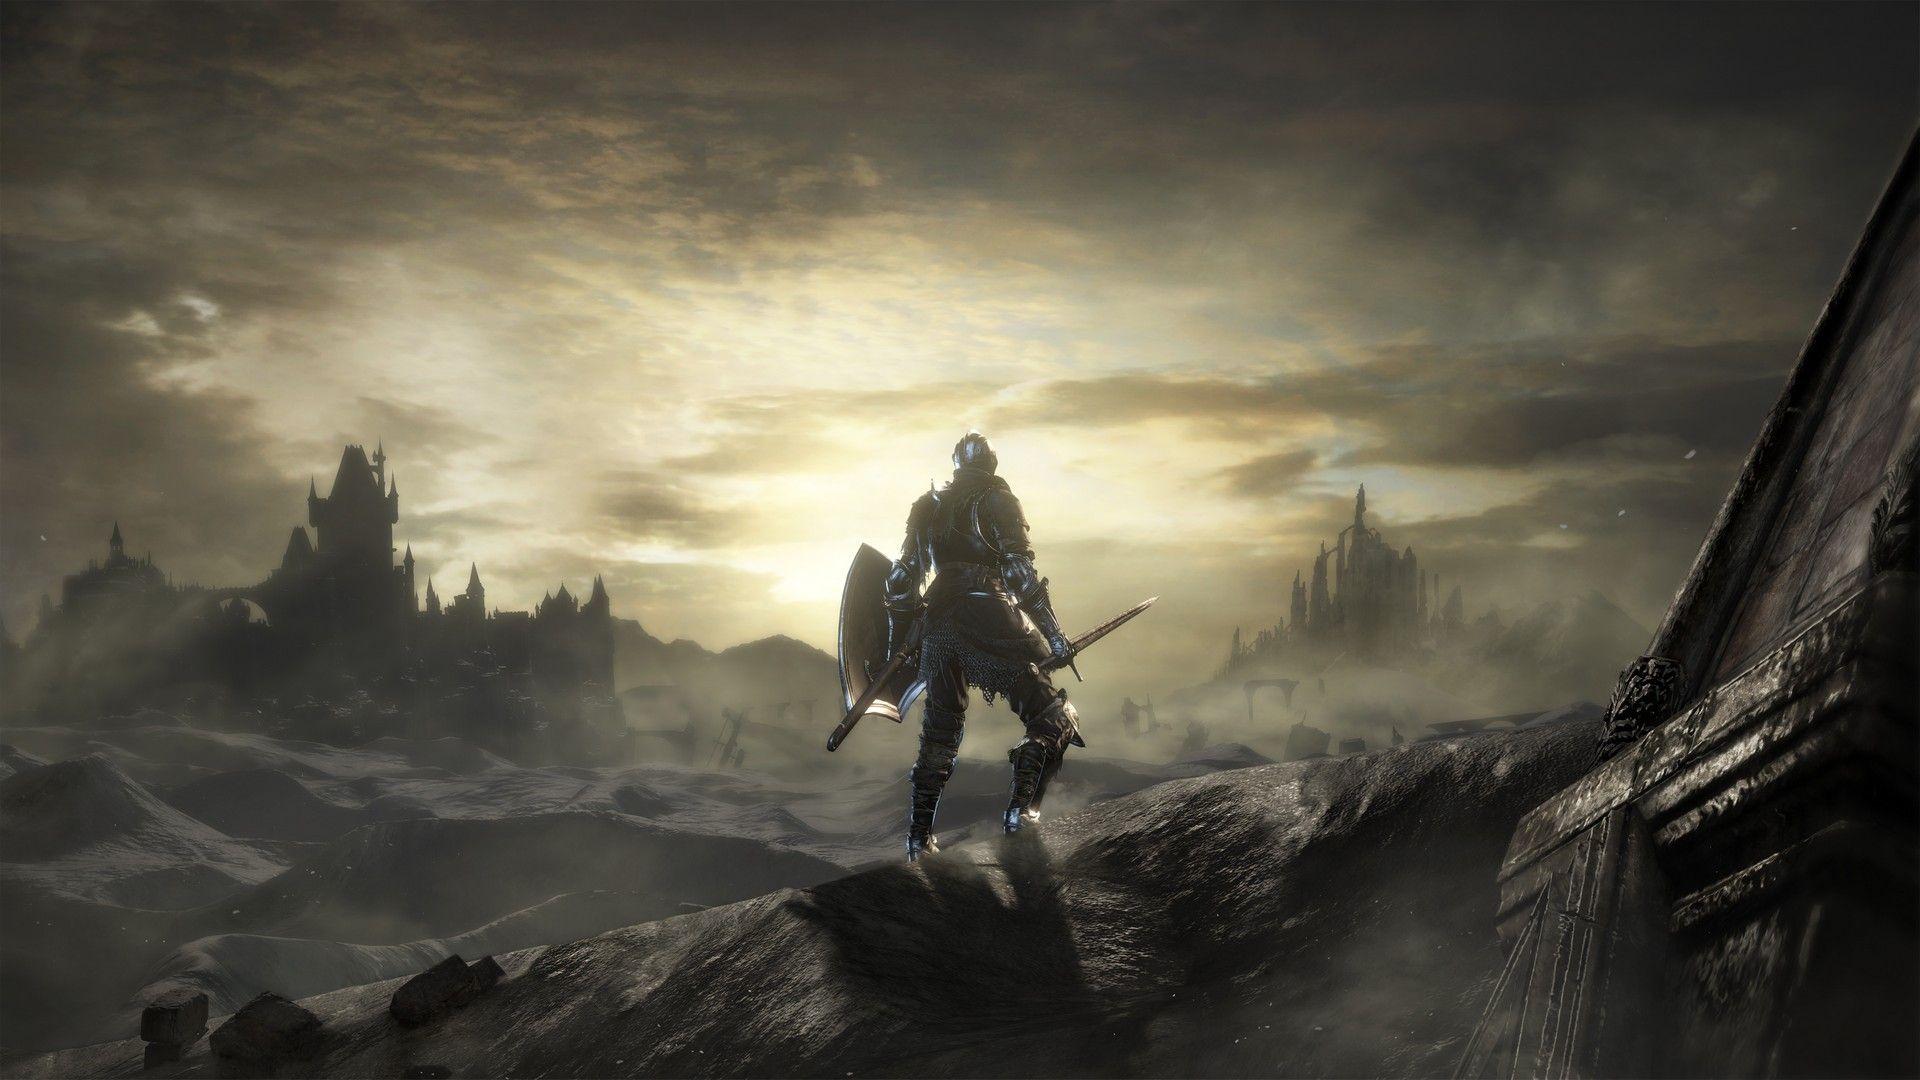 Dark Souls Remastered Wallpaper. Read games reviews, play online